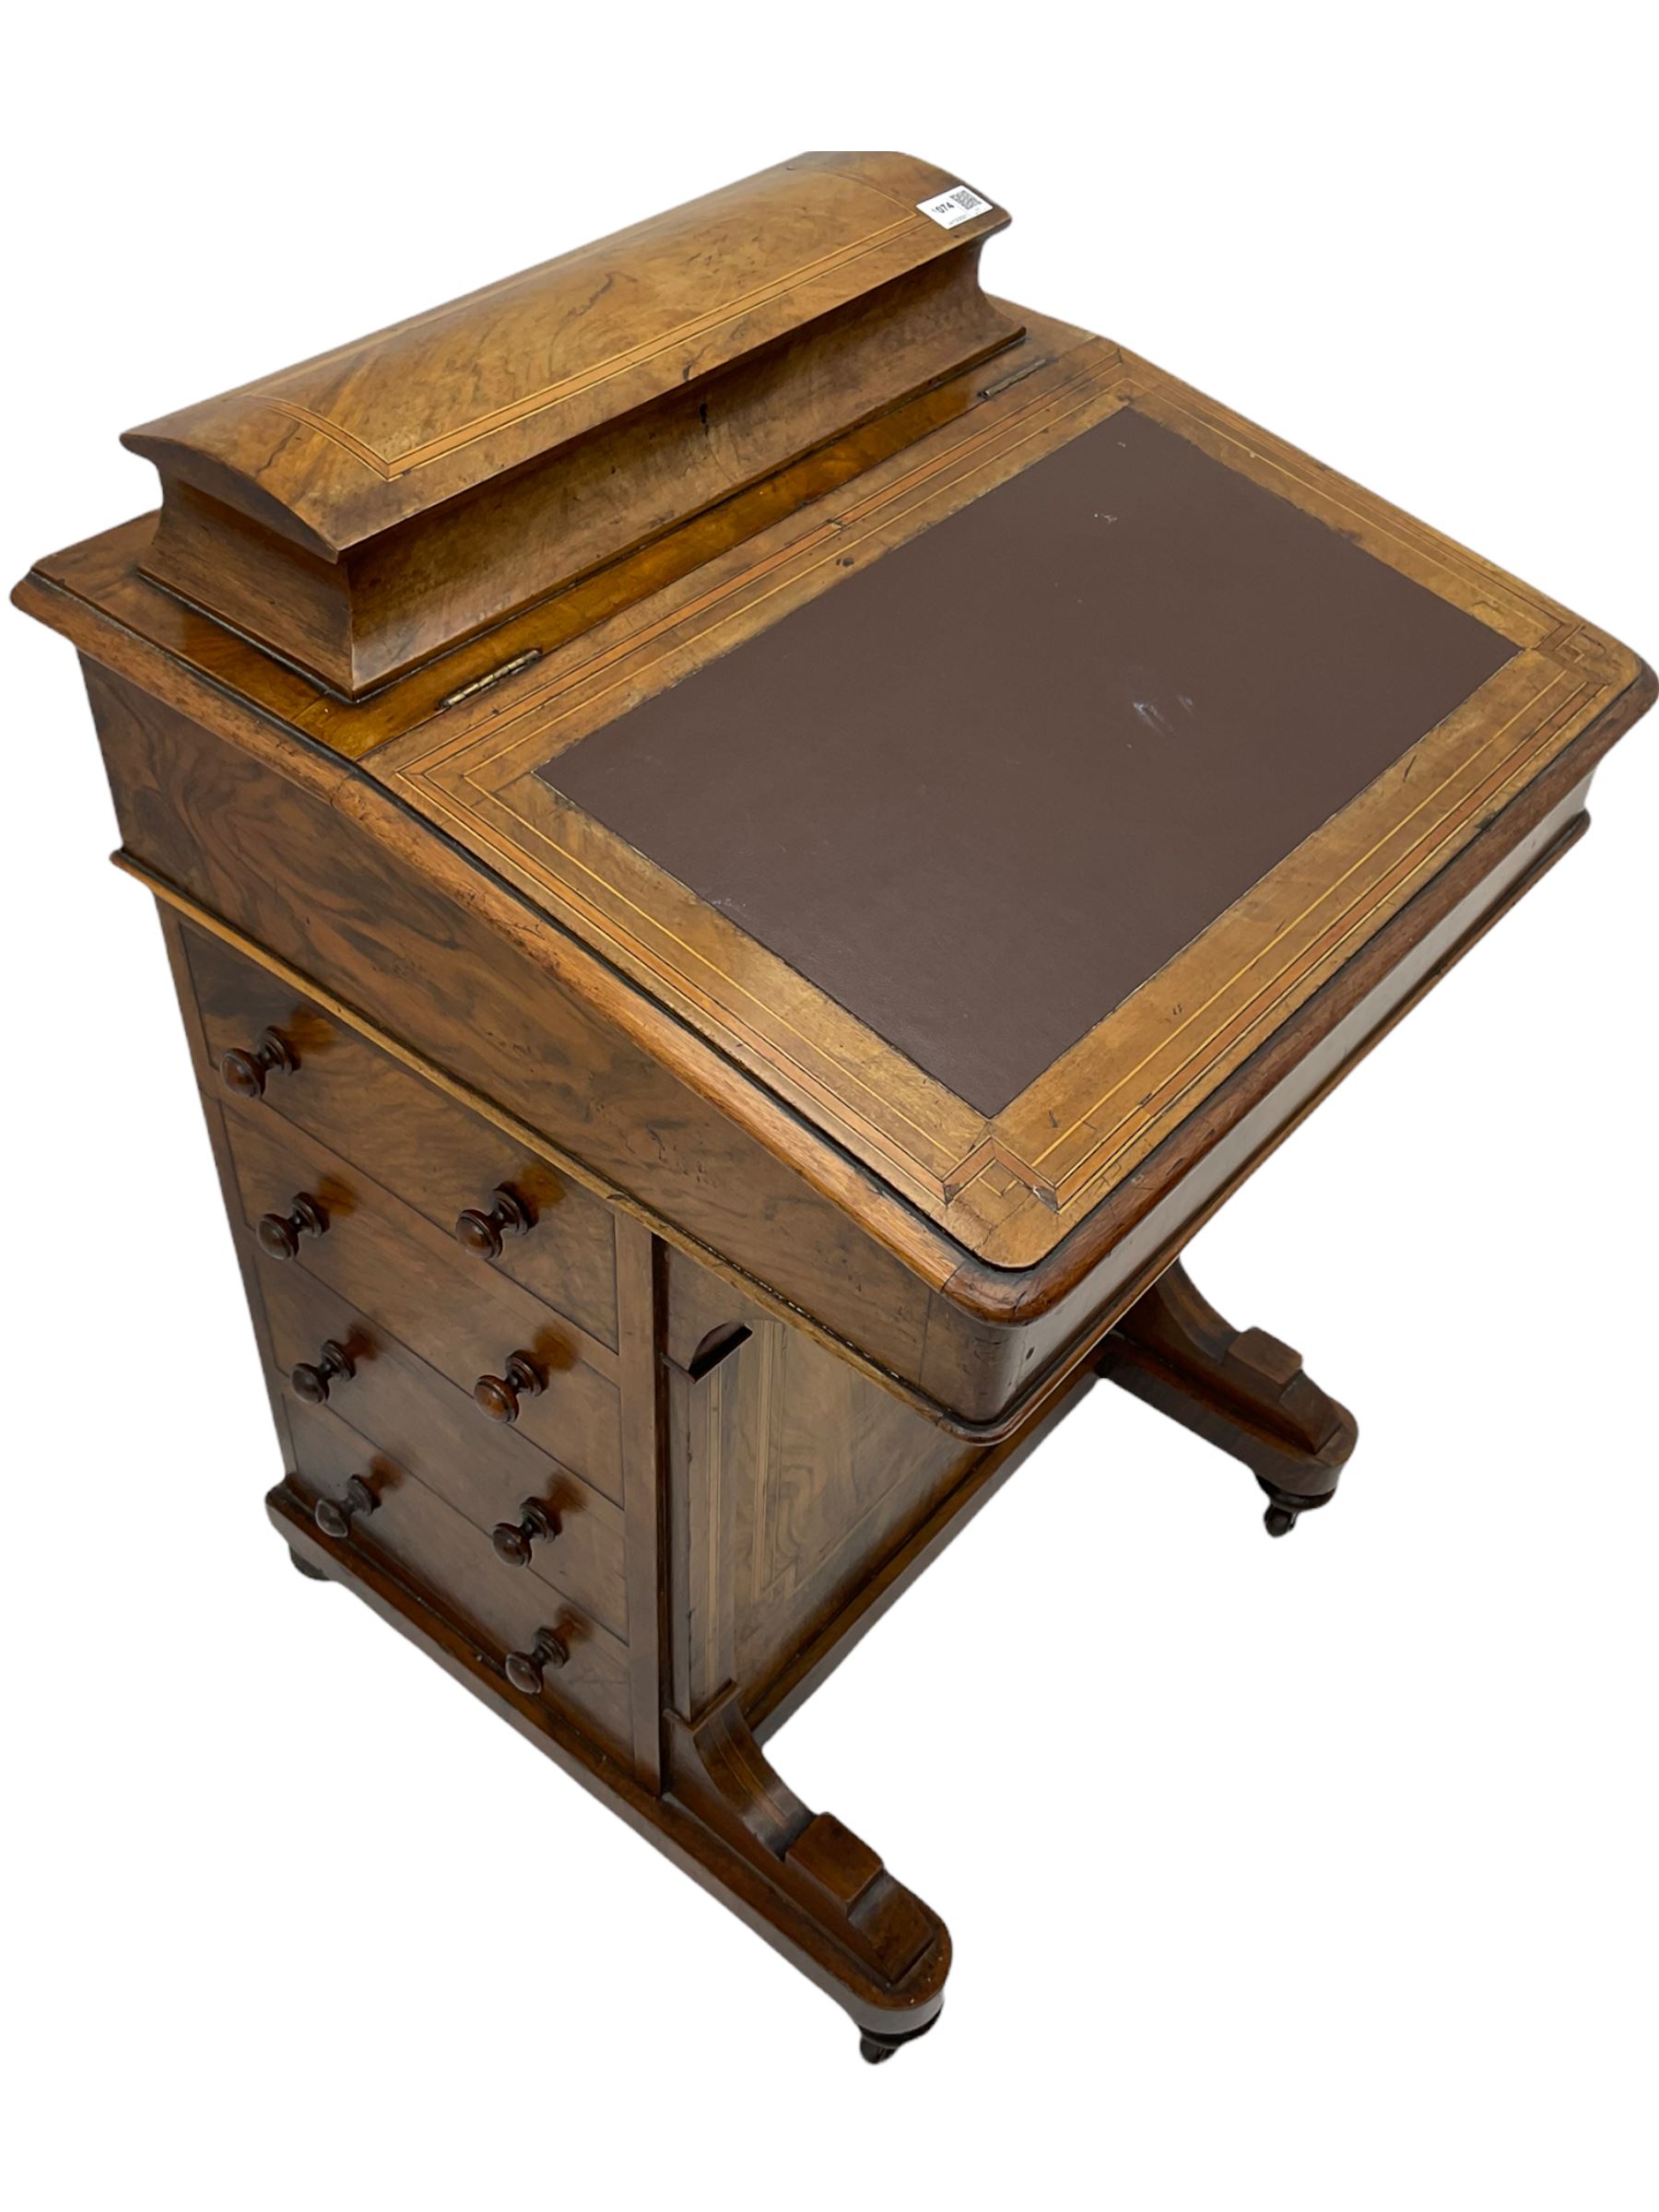 Victorian inlaid walnut Davenport desk - Image 4 of 7